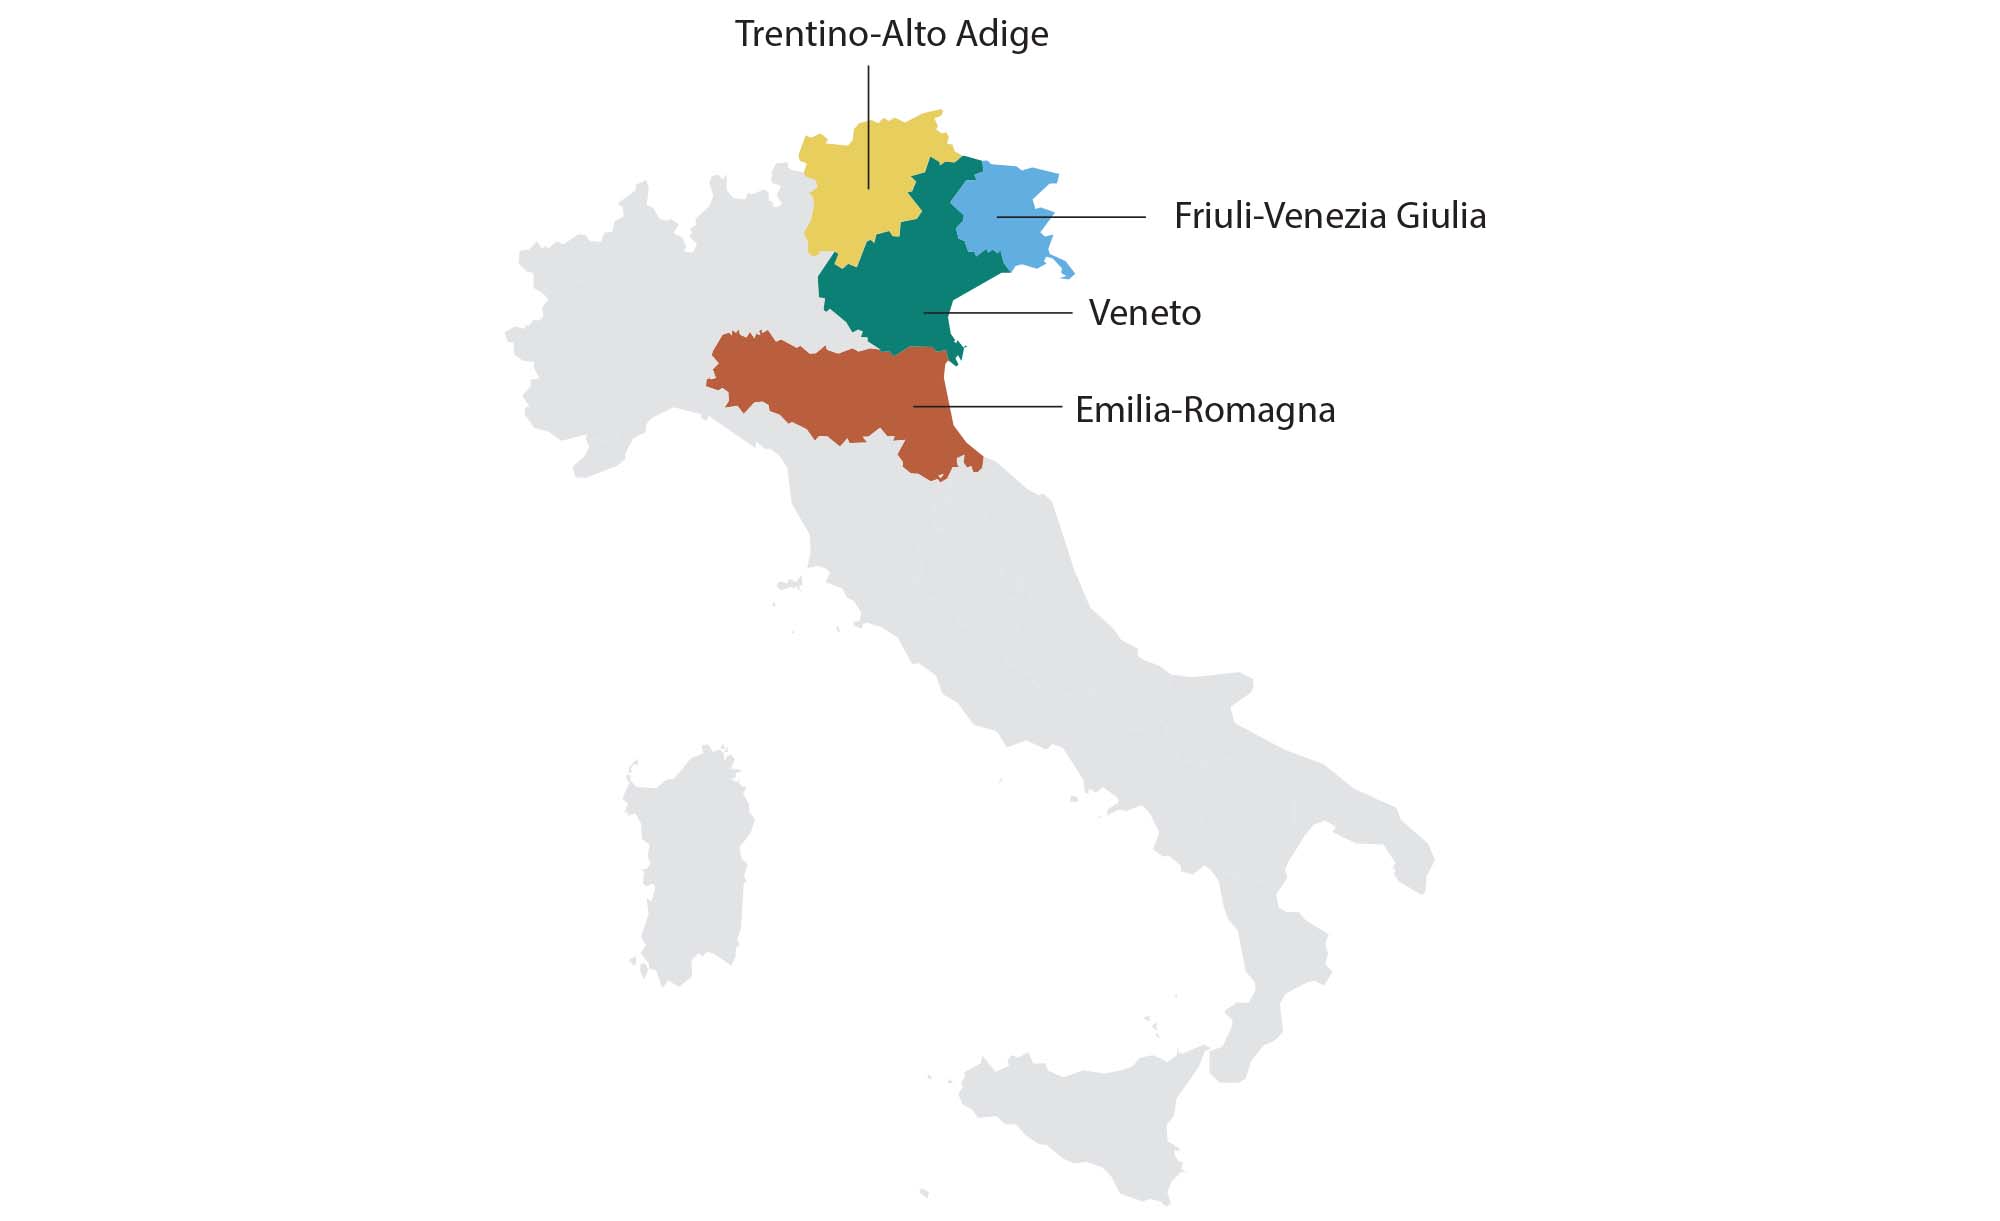 Northeast Italian winemaking regions: Trento-Alto Adige, Friuli-Venezia Giuli, Venento and Emilia-Romagna .